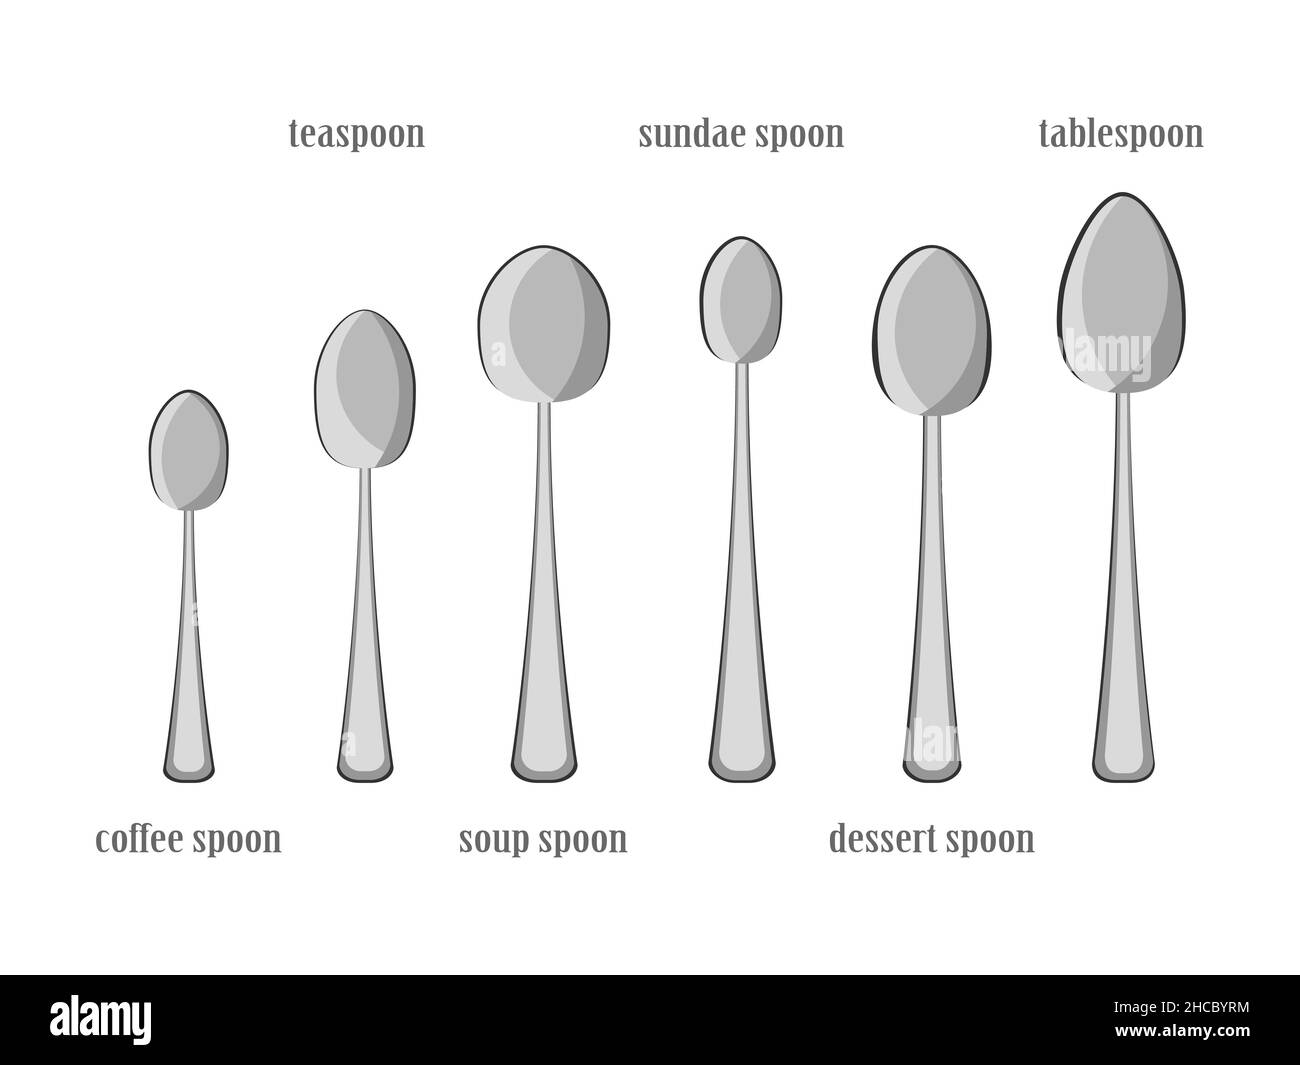 Cartoon kitchen colection spoons. Coffee spoon, teaspoon, soup spoon, ice cream spoon, dessert spoon, tablespoon. Eating utensils icons elements isola Stock Vector